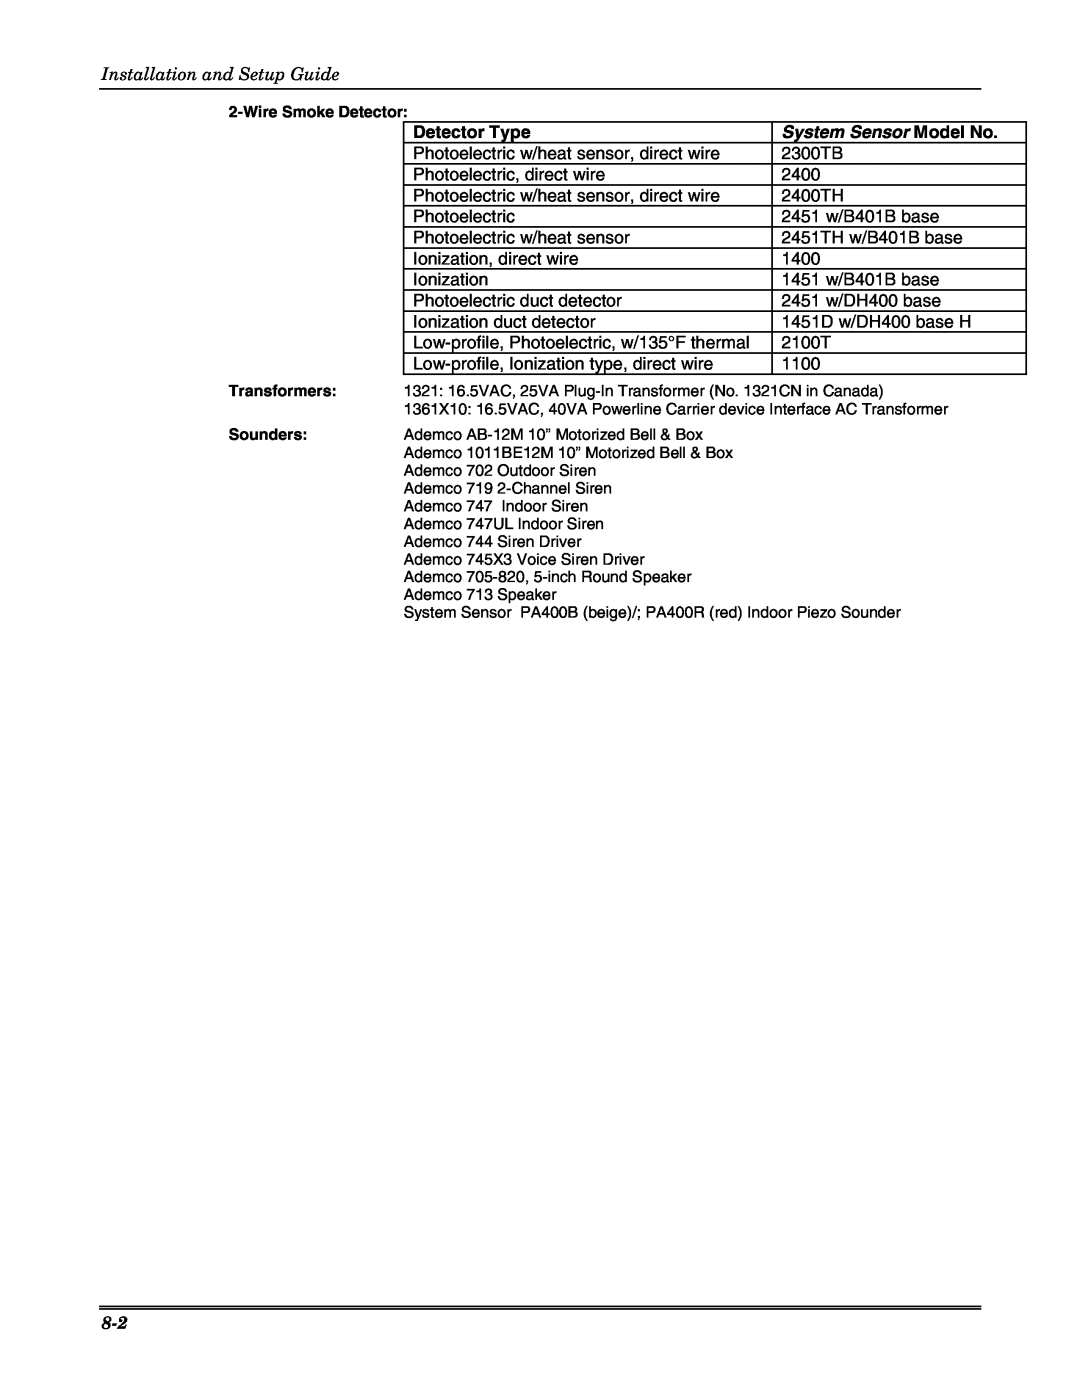 Honeywell K5305-1V5 setup guide Installation and Setup Guide, Detector Type, System Sensor Model No 